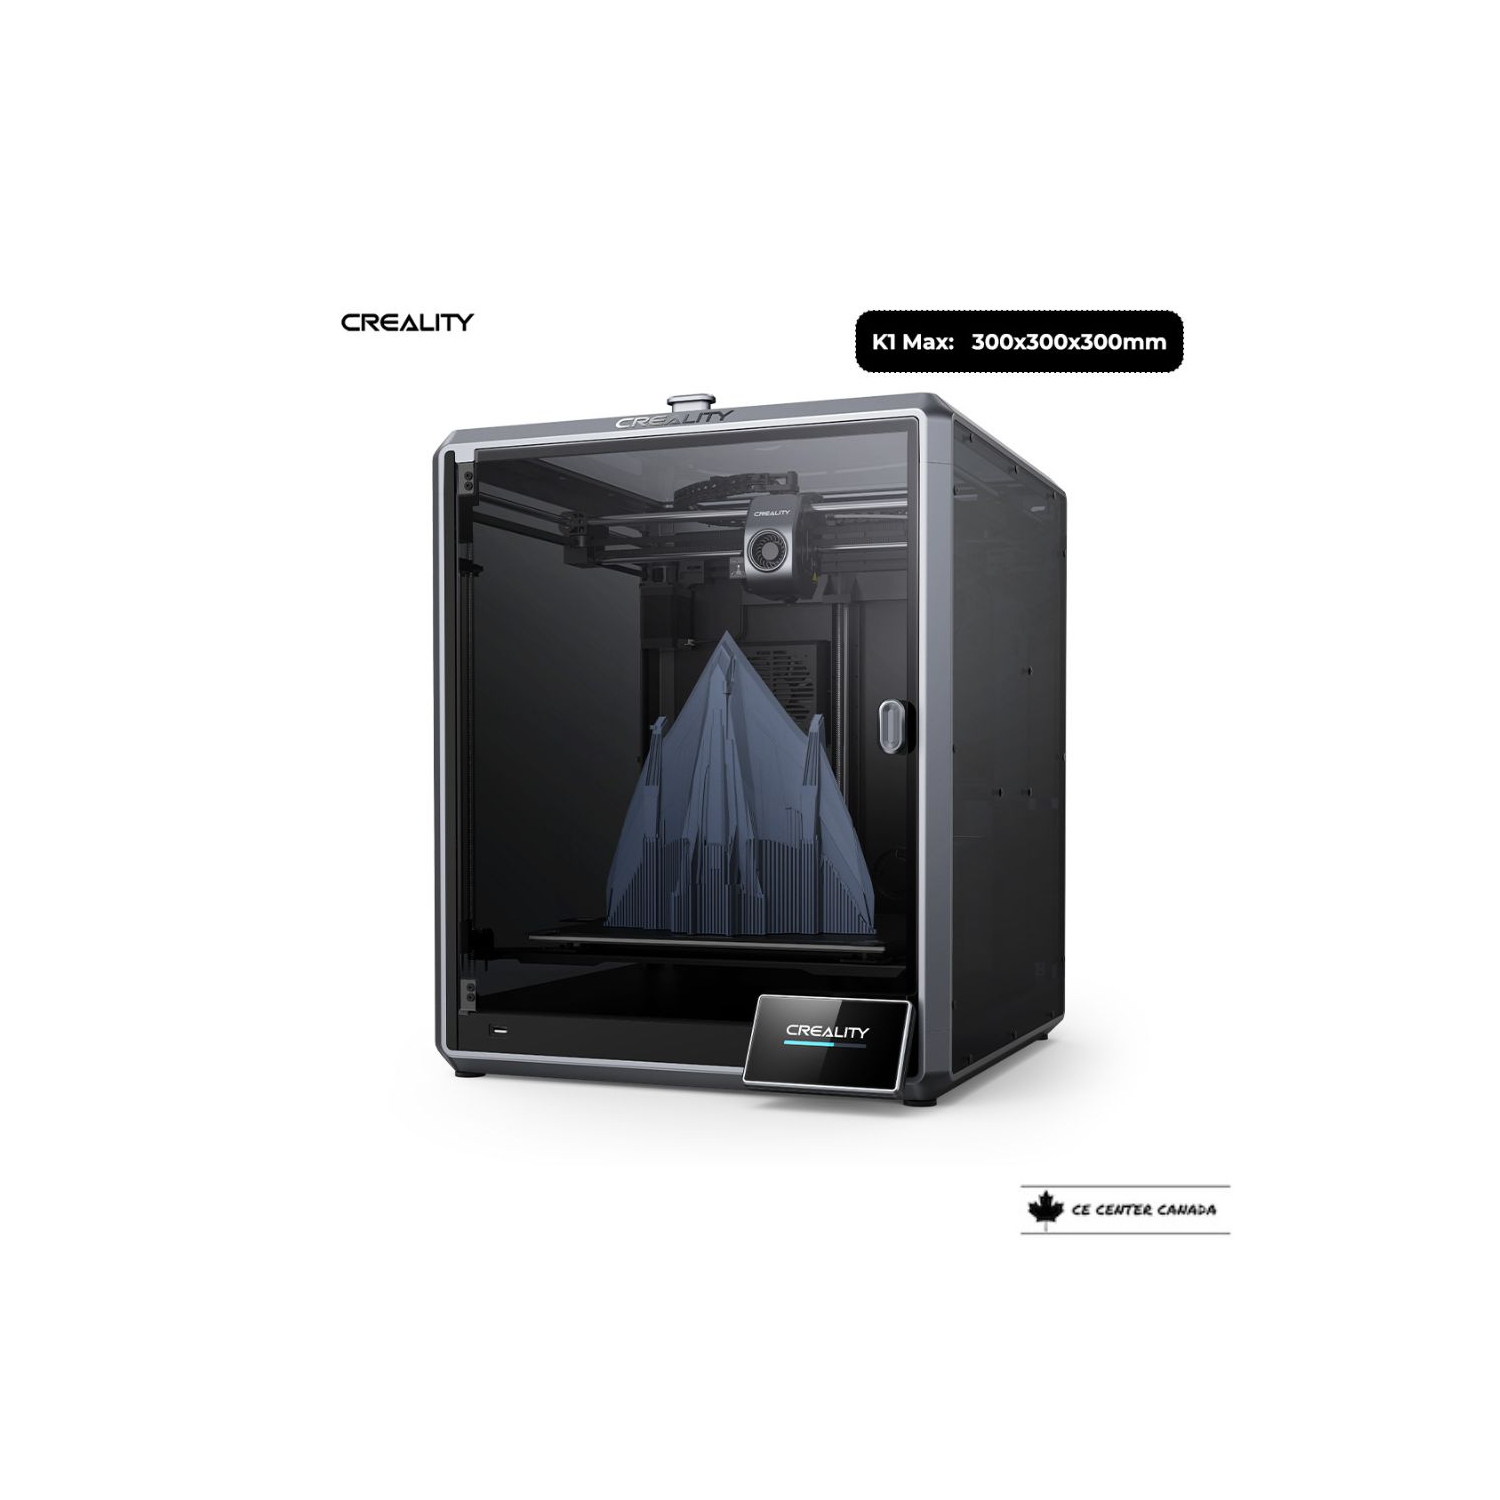 Creality K1 Max (300x300x300mm) AI Speedy 3D Printers